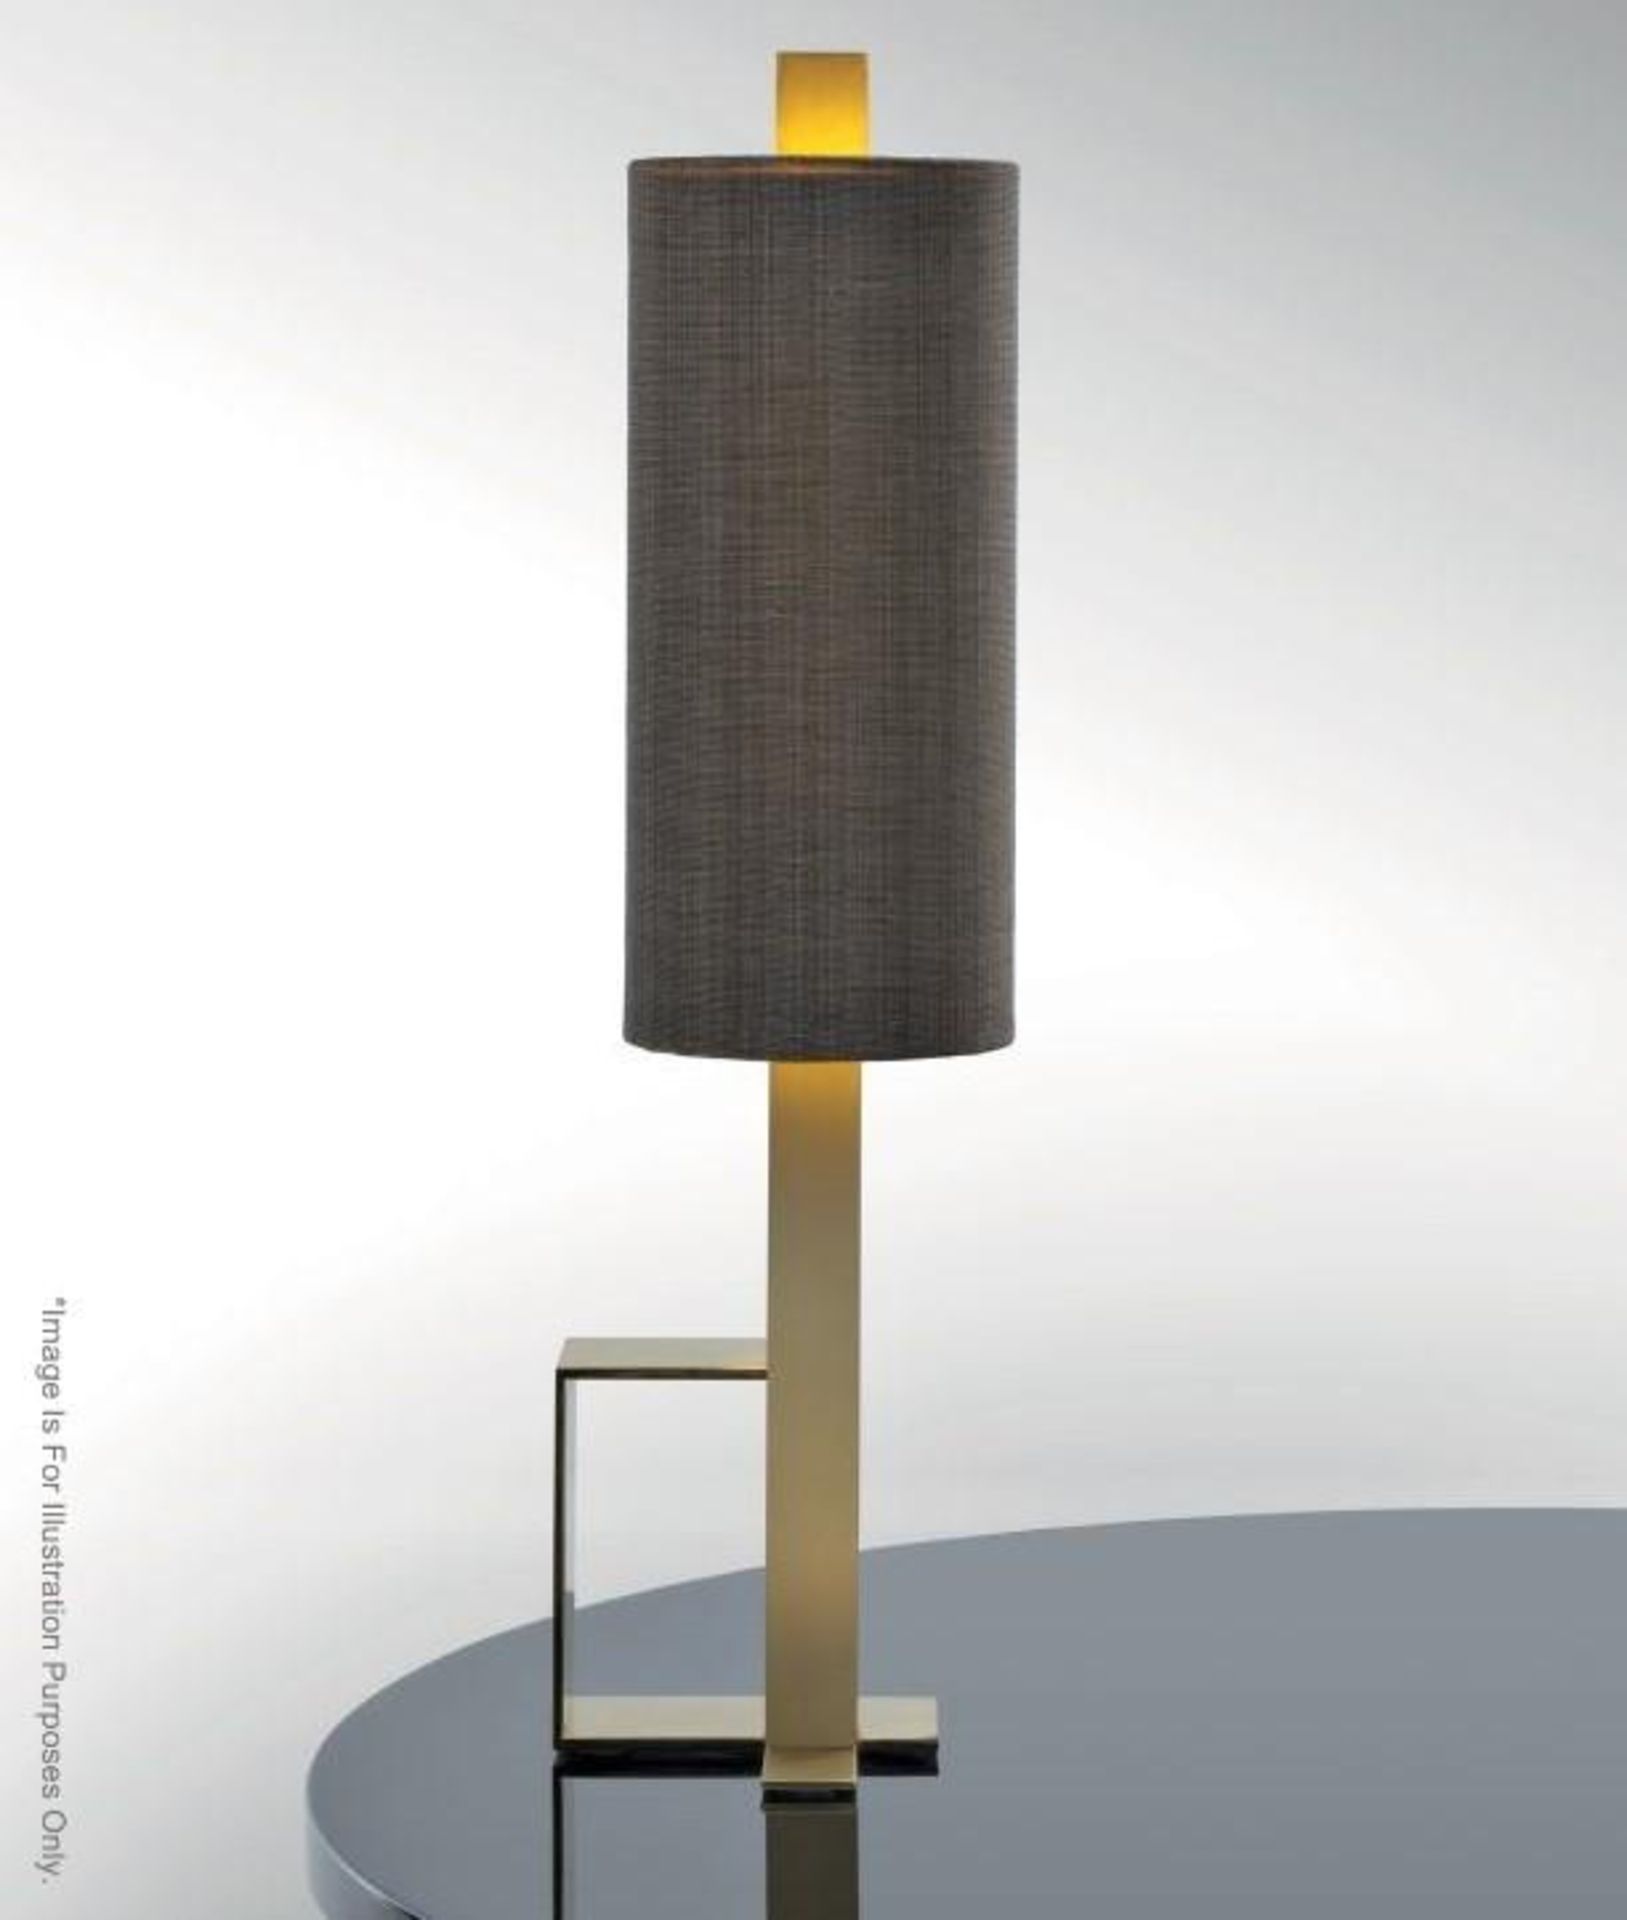 1 x FENDI CASA Chiara Bedside Lamp in Gold - Dimensions: H74 x W16 x D16cm - Ref: 4822331B - CL087 - - Image 11 of 14